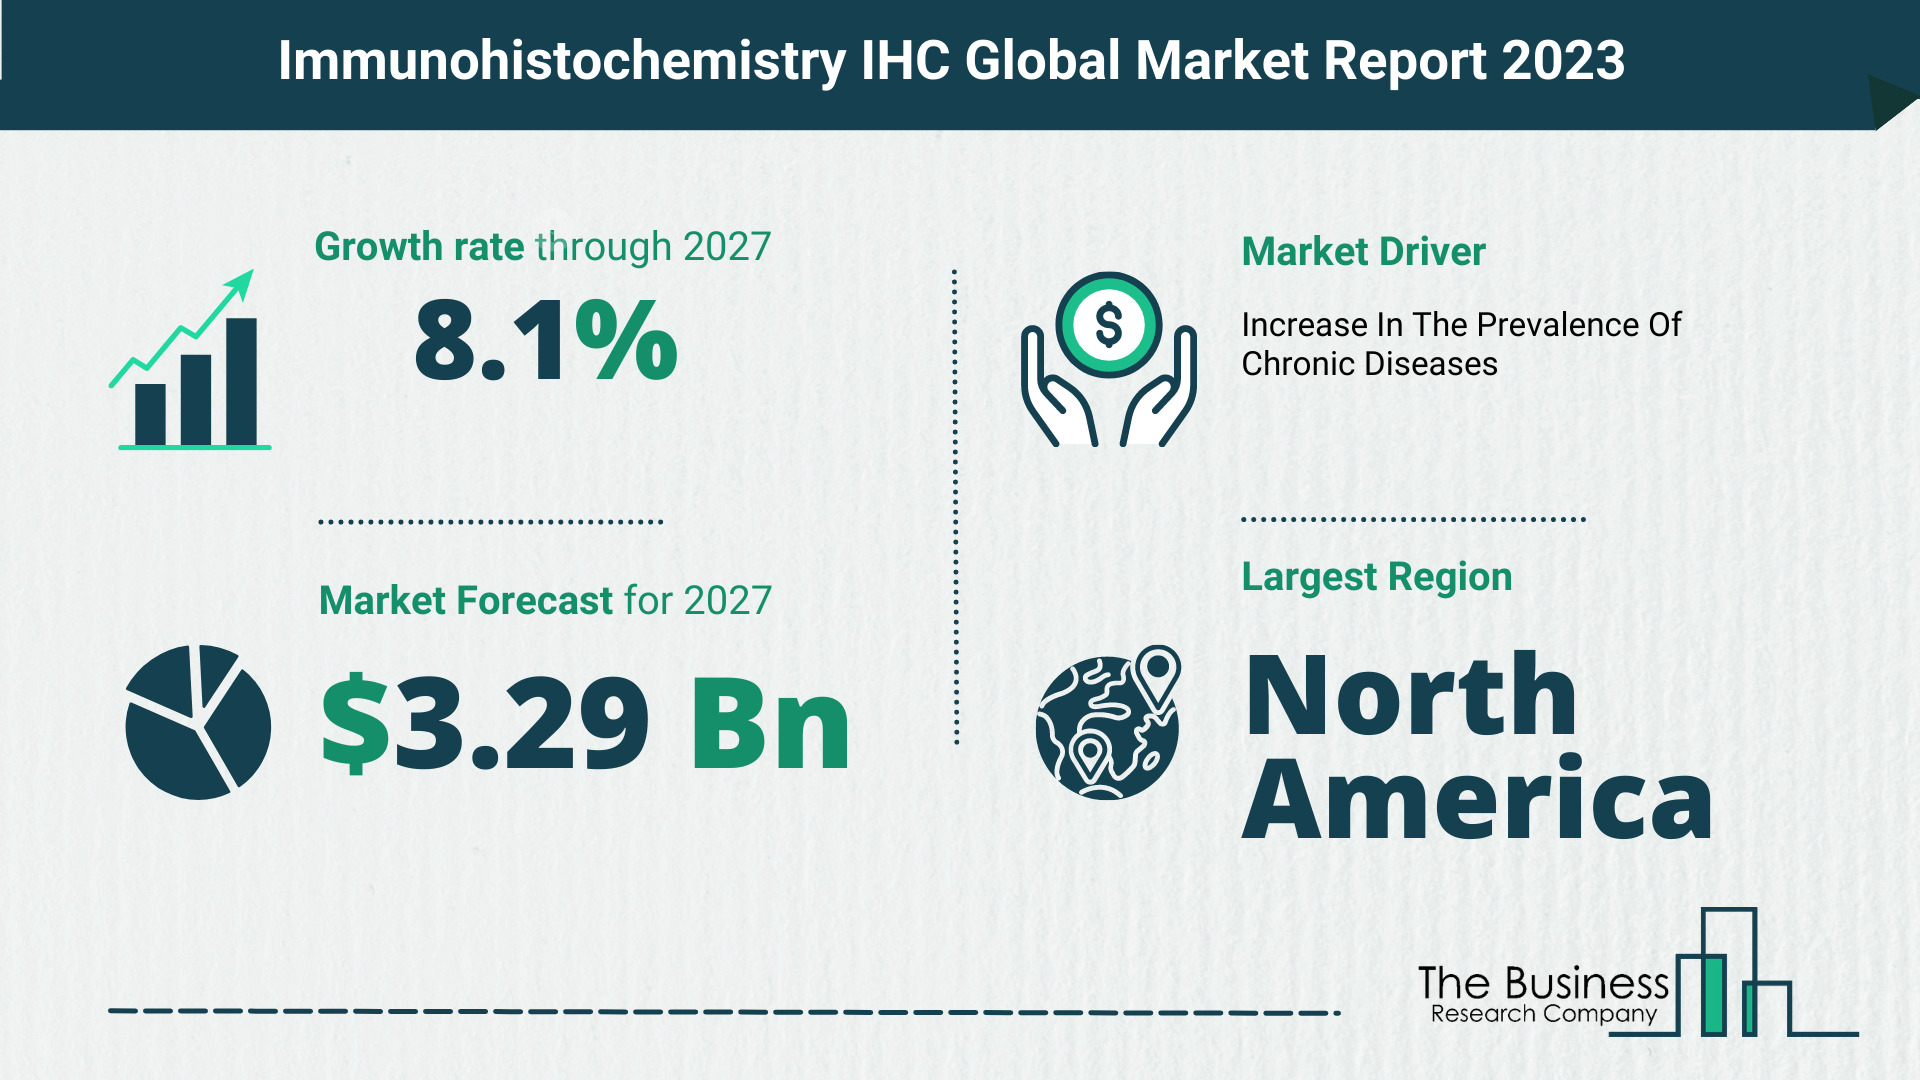 Global Immunohistochemistry IHC Market Opportunities And Strategies 2023